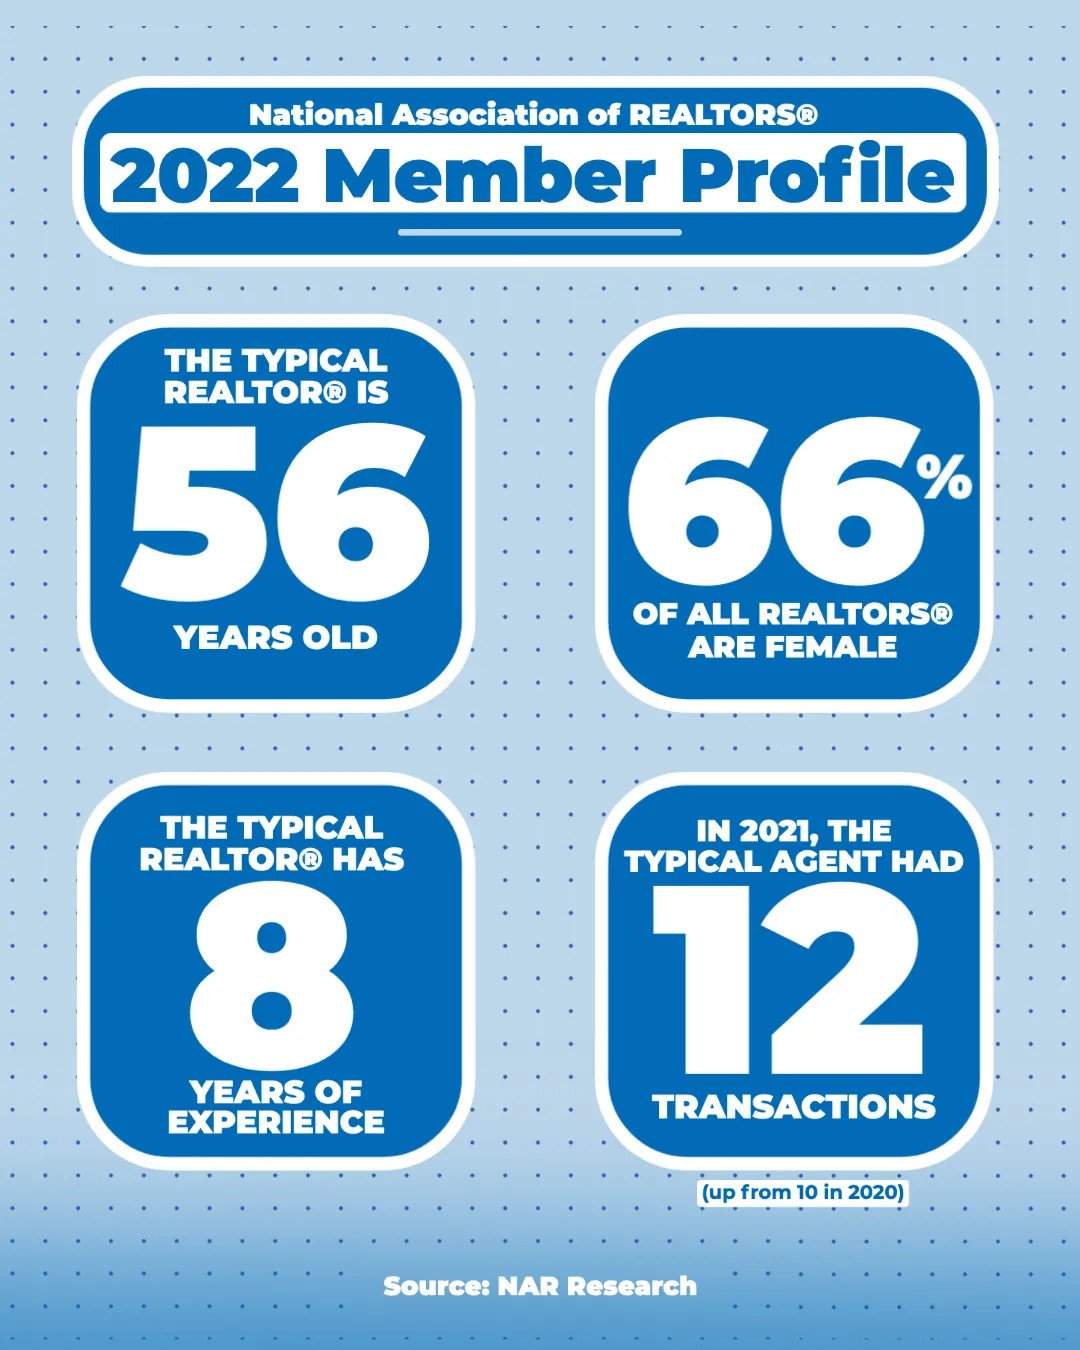 nar member profile 2022 infographic